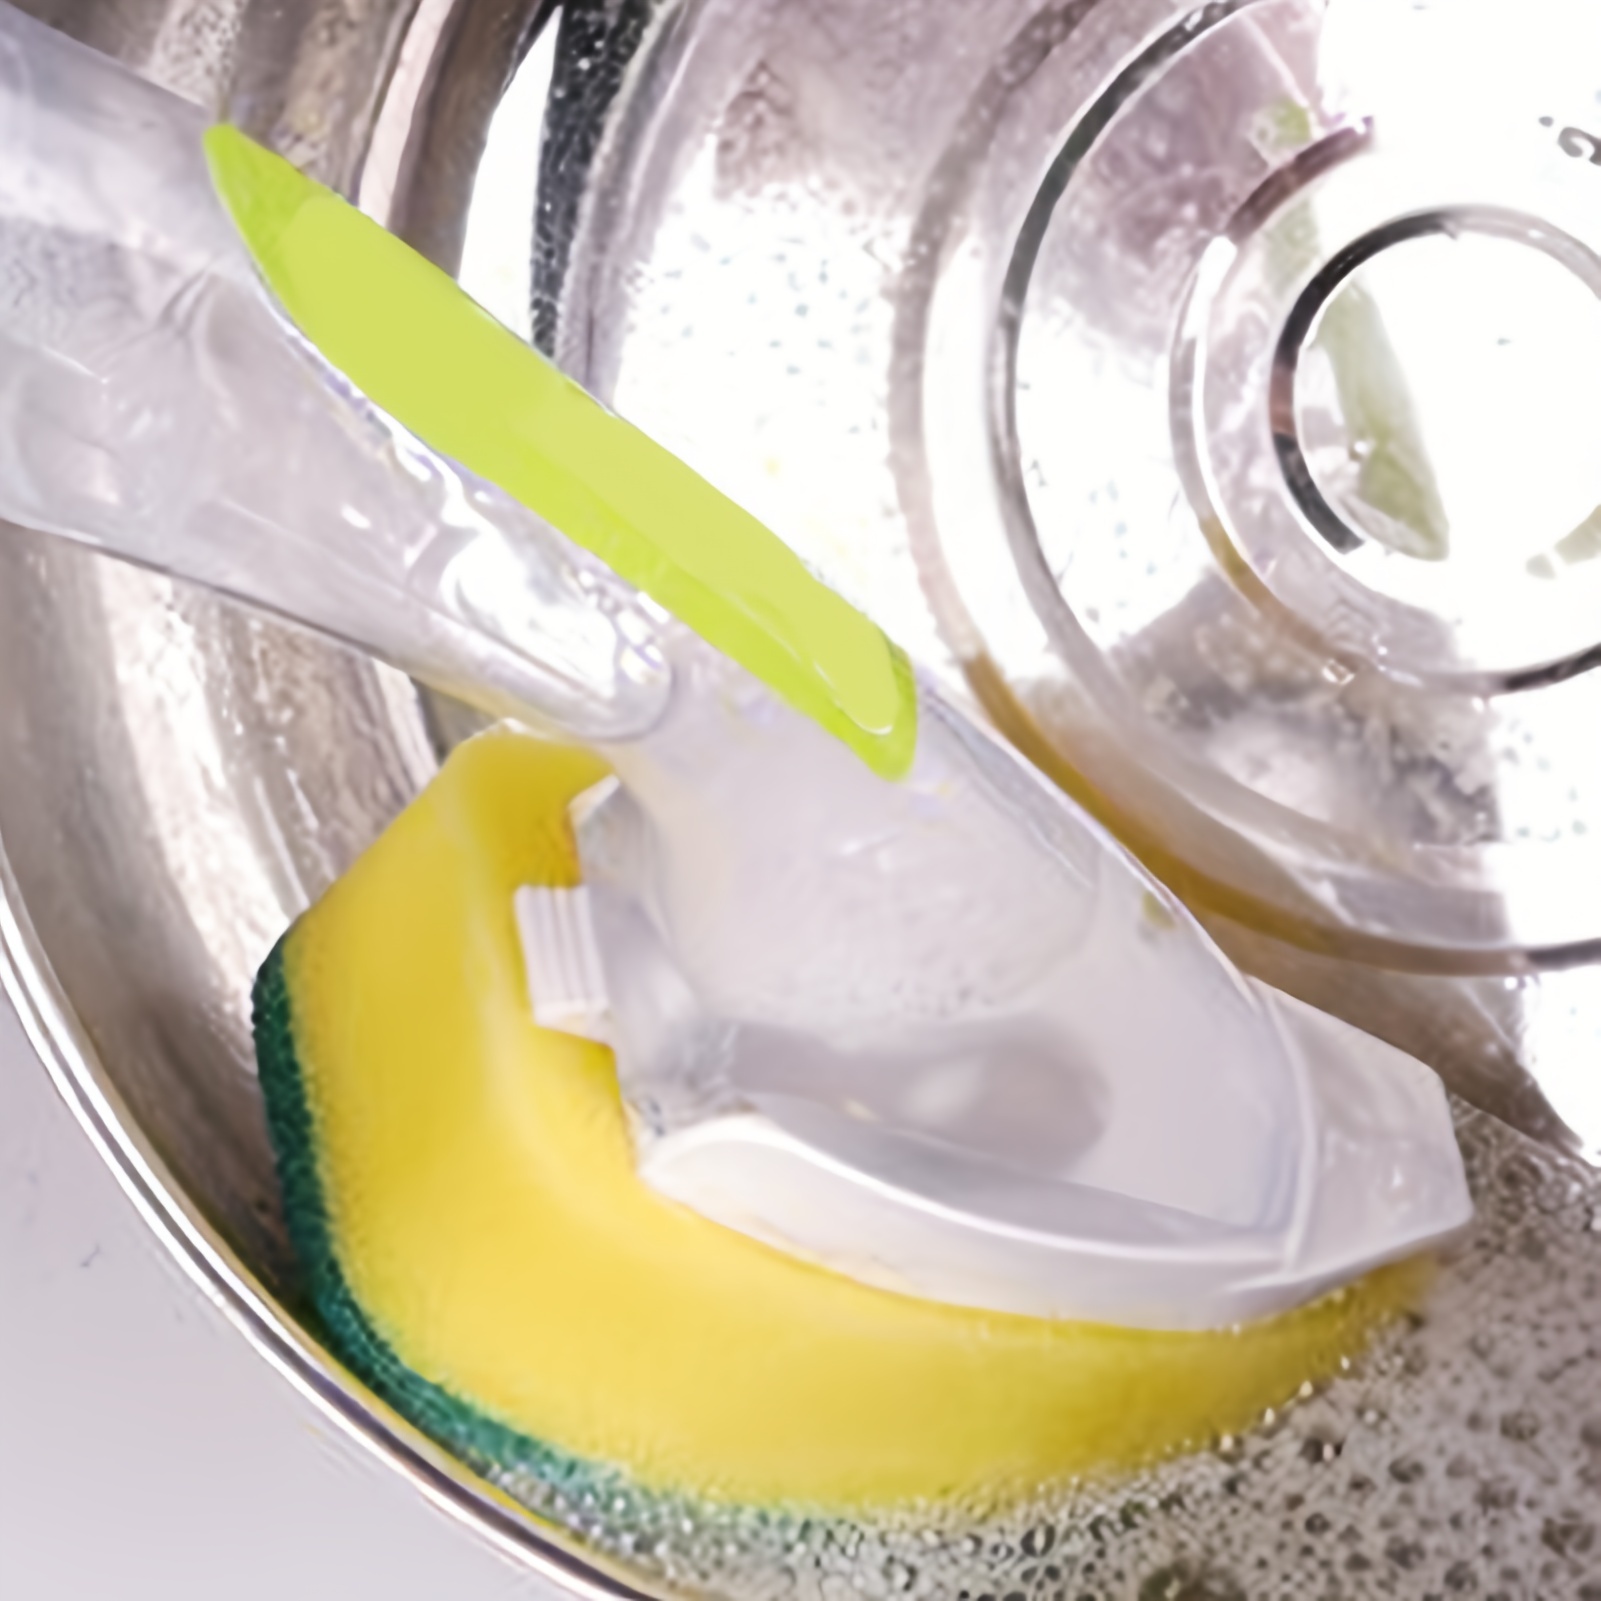 8pcs Dishwand Refill Replacement Heads Sponge Brush Dish Scrubber